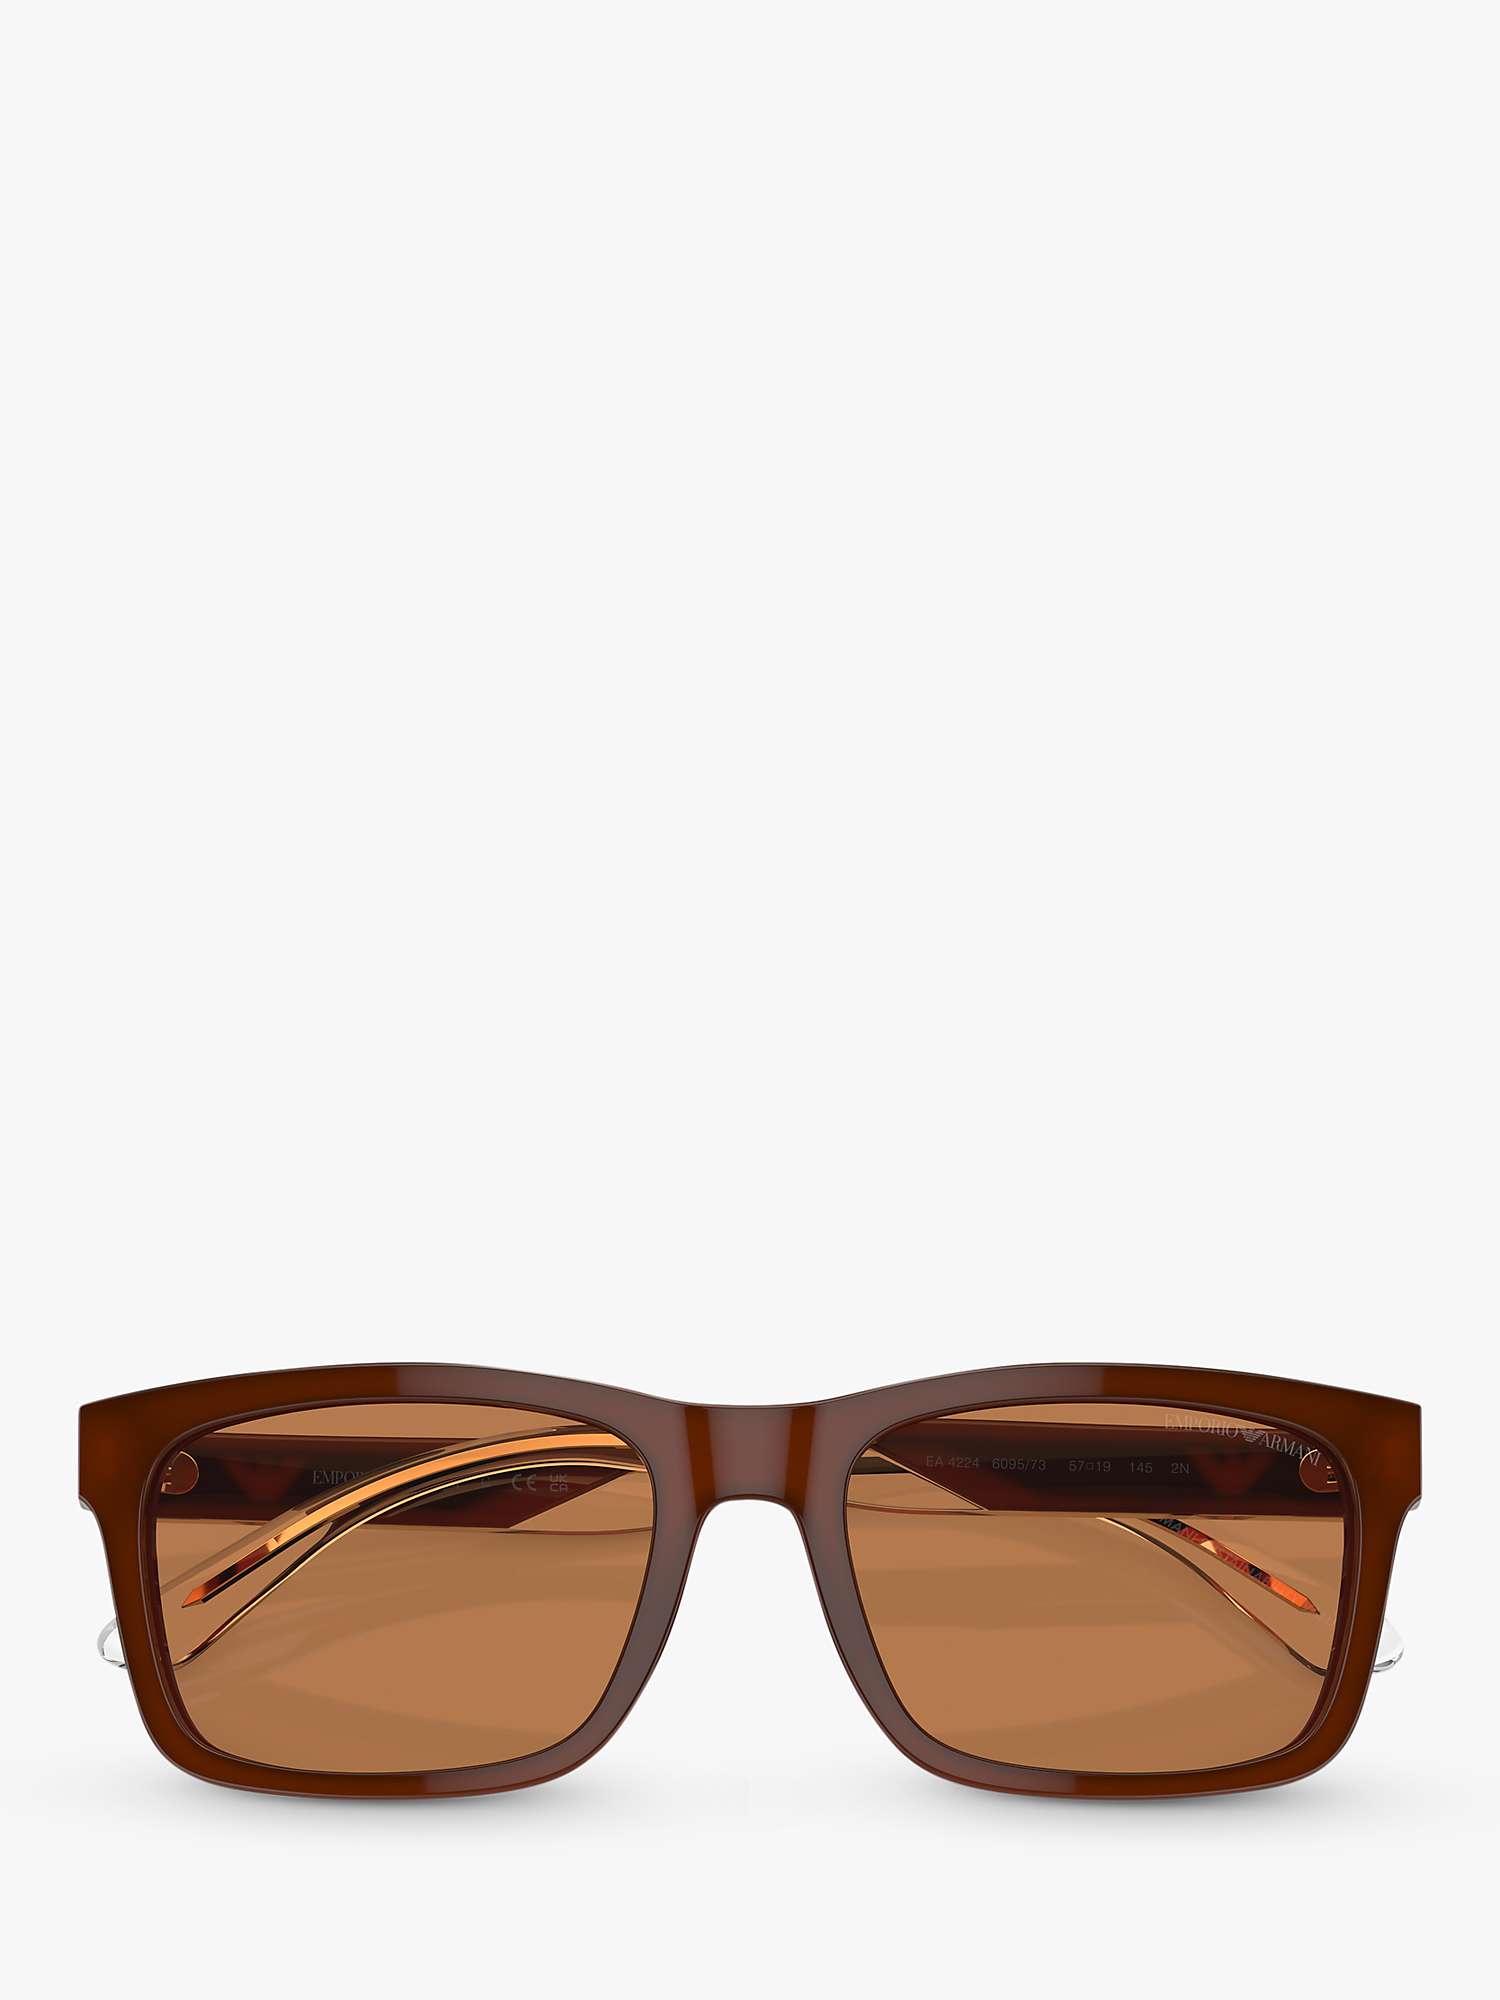 Buy Emporio Armani EA4224 Men's Rectangular Sunglasses, Shiny Opaline/Brown Online at johnlewis.com